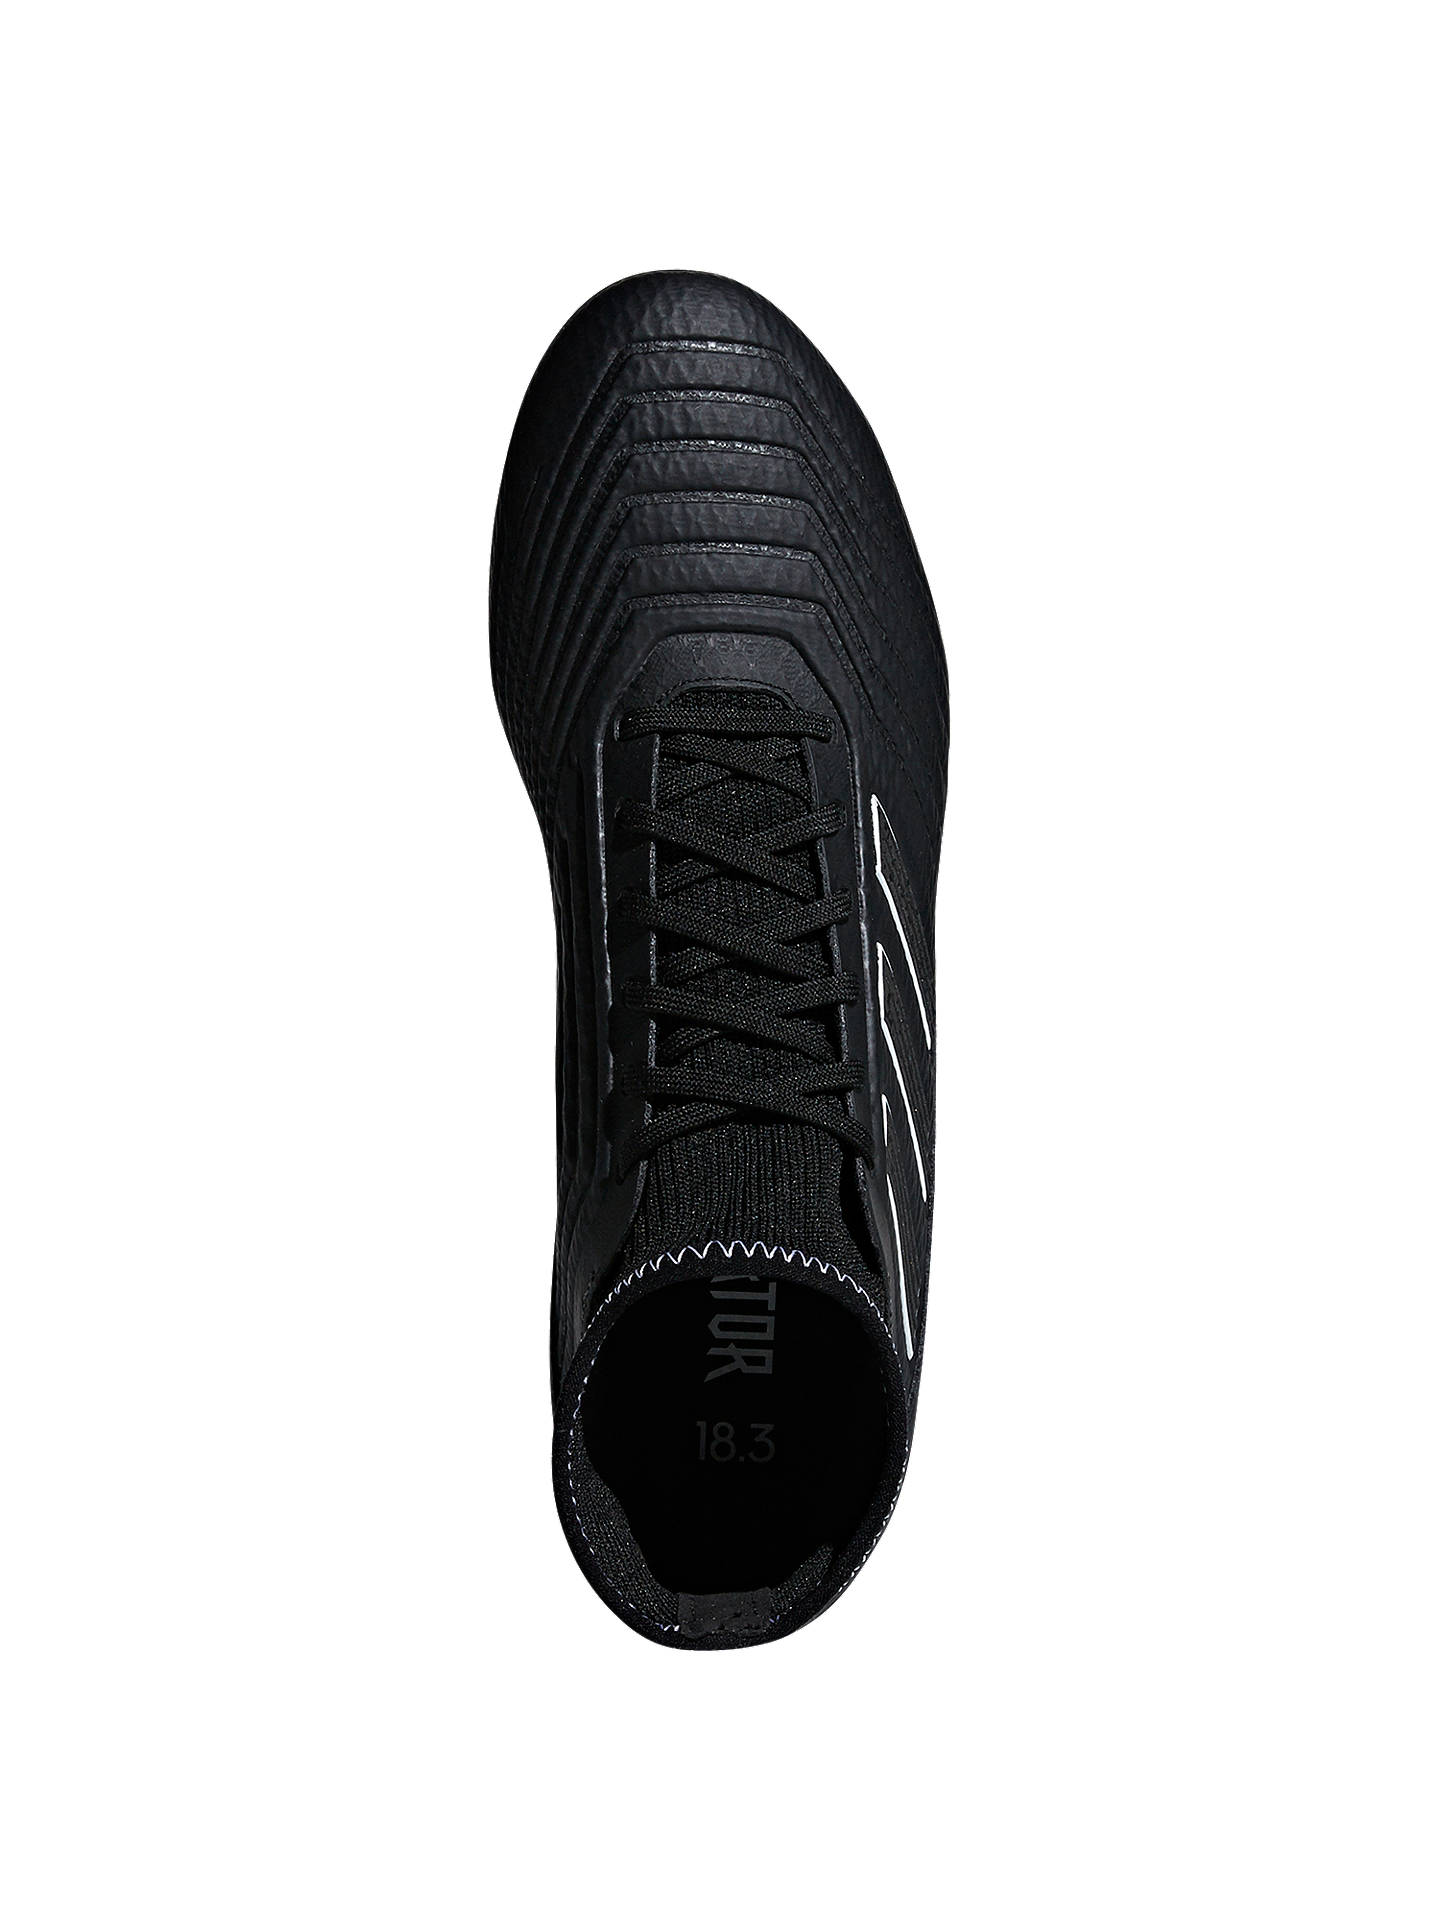 Adidas Predator 18 3 Men S Firm Ground Football Boots Core Black